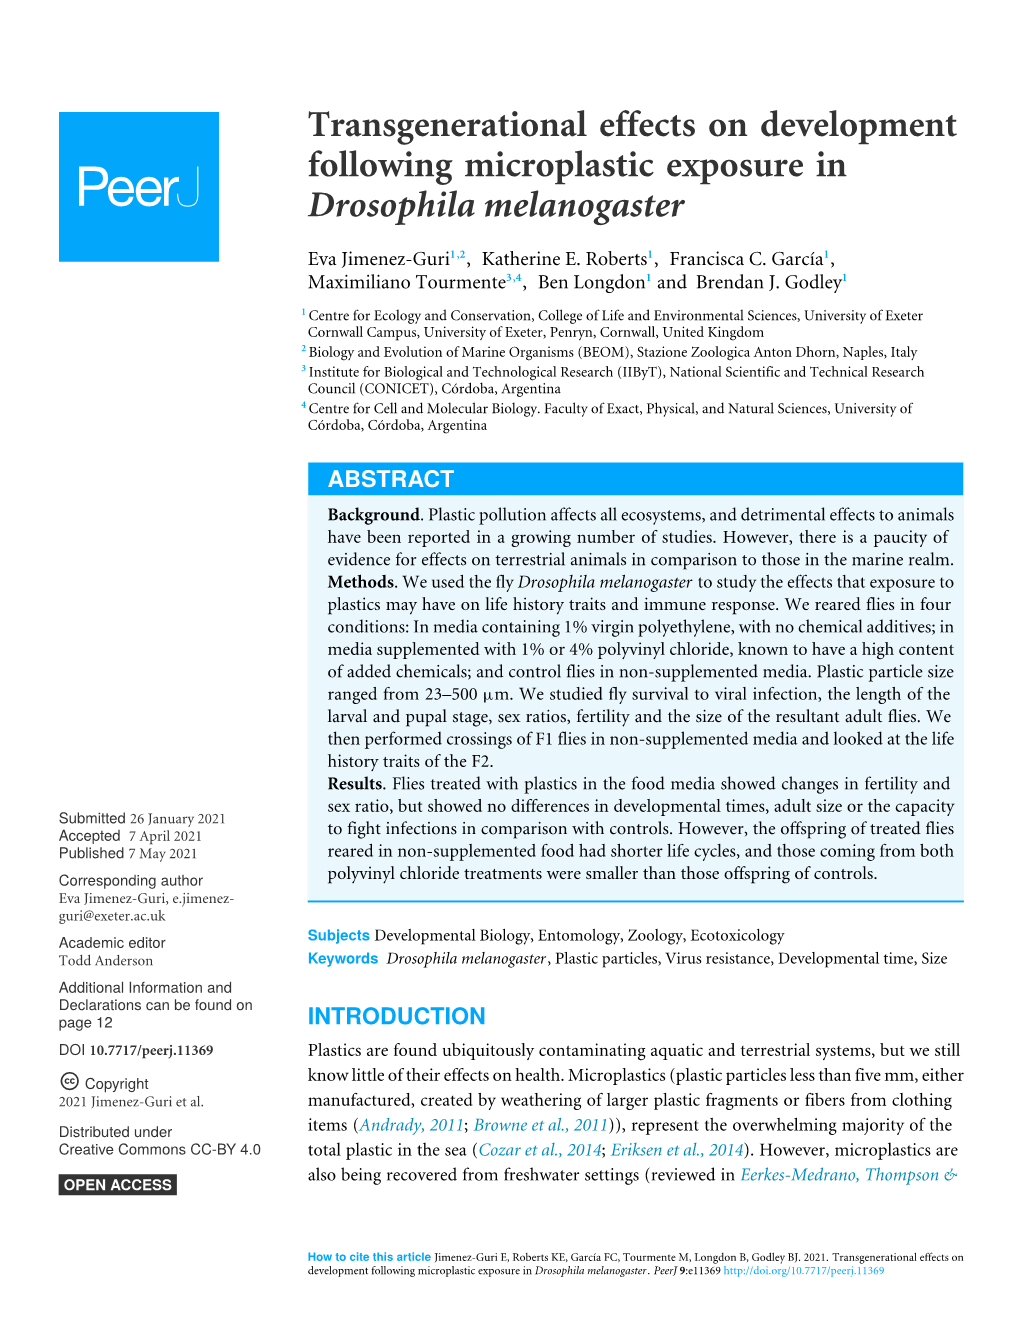 Transgenerational Effects on Development Following Microplastic Exposure in Drosophila Melanogaster